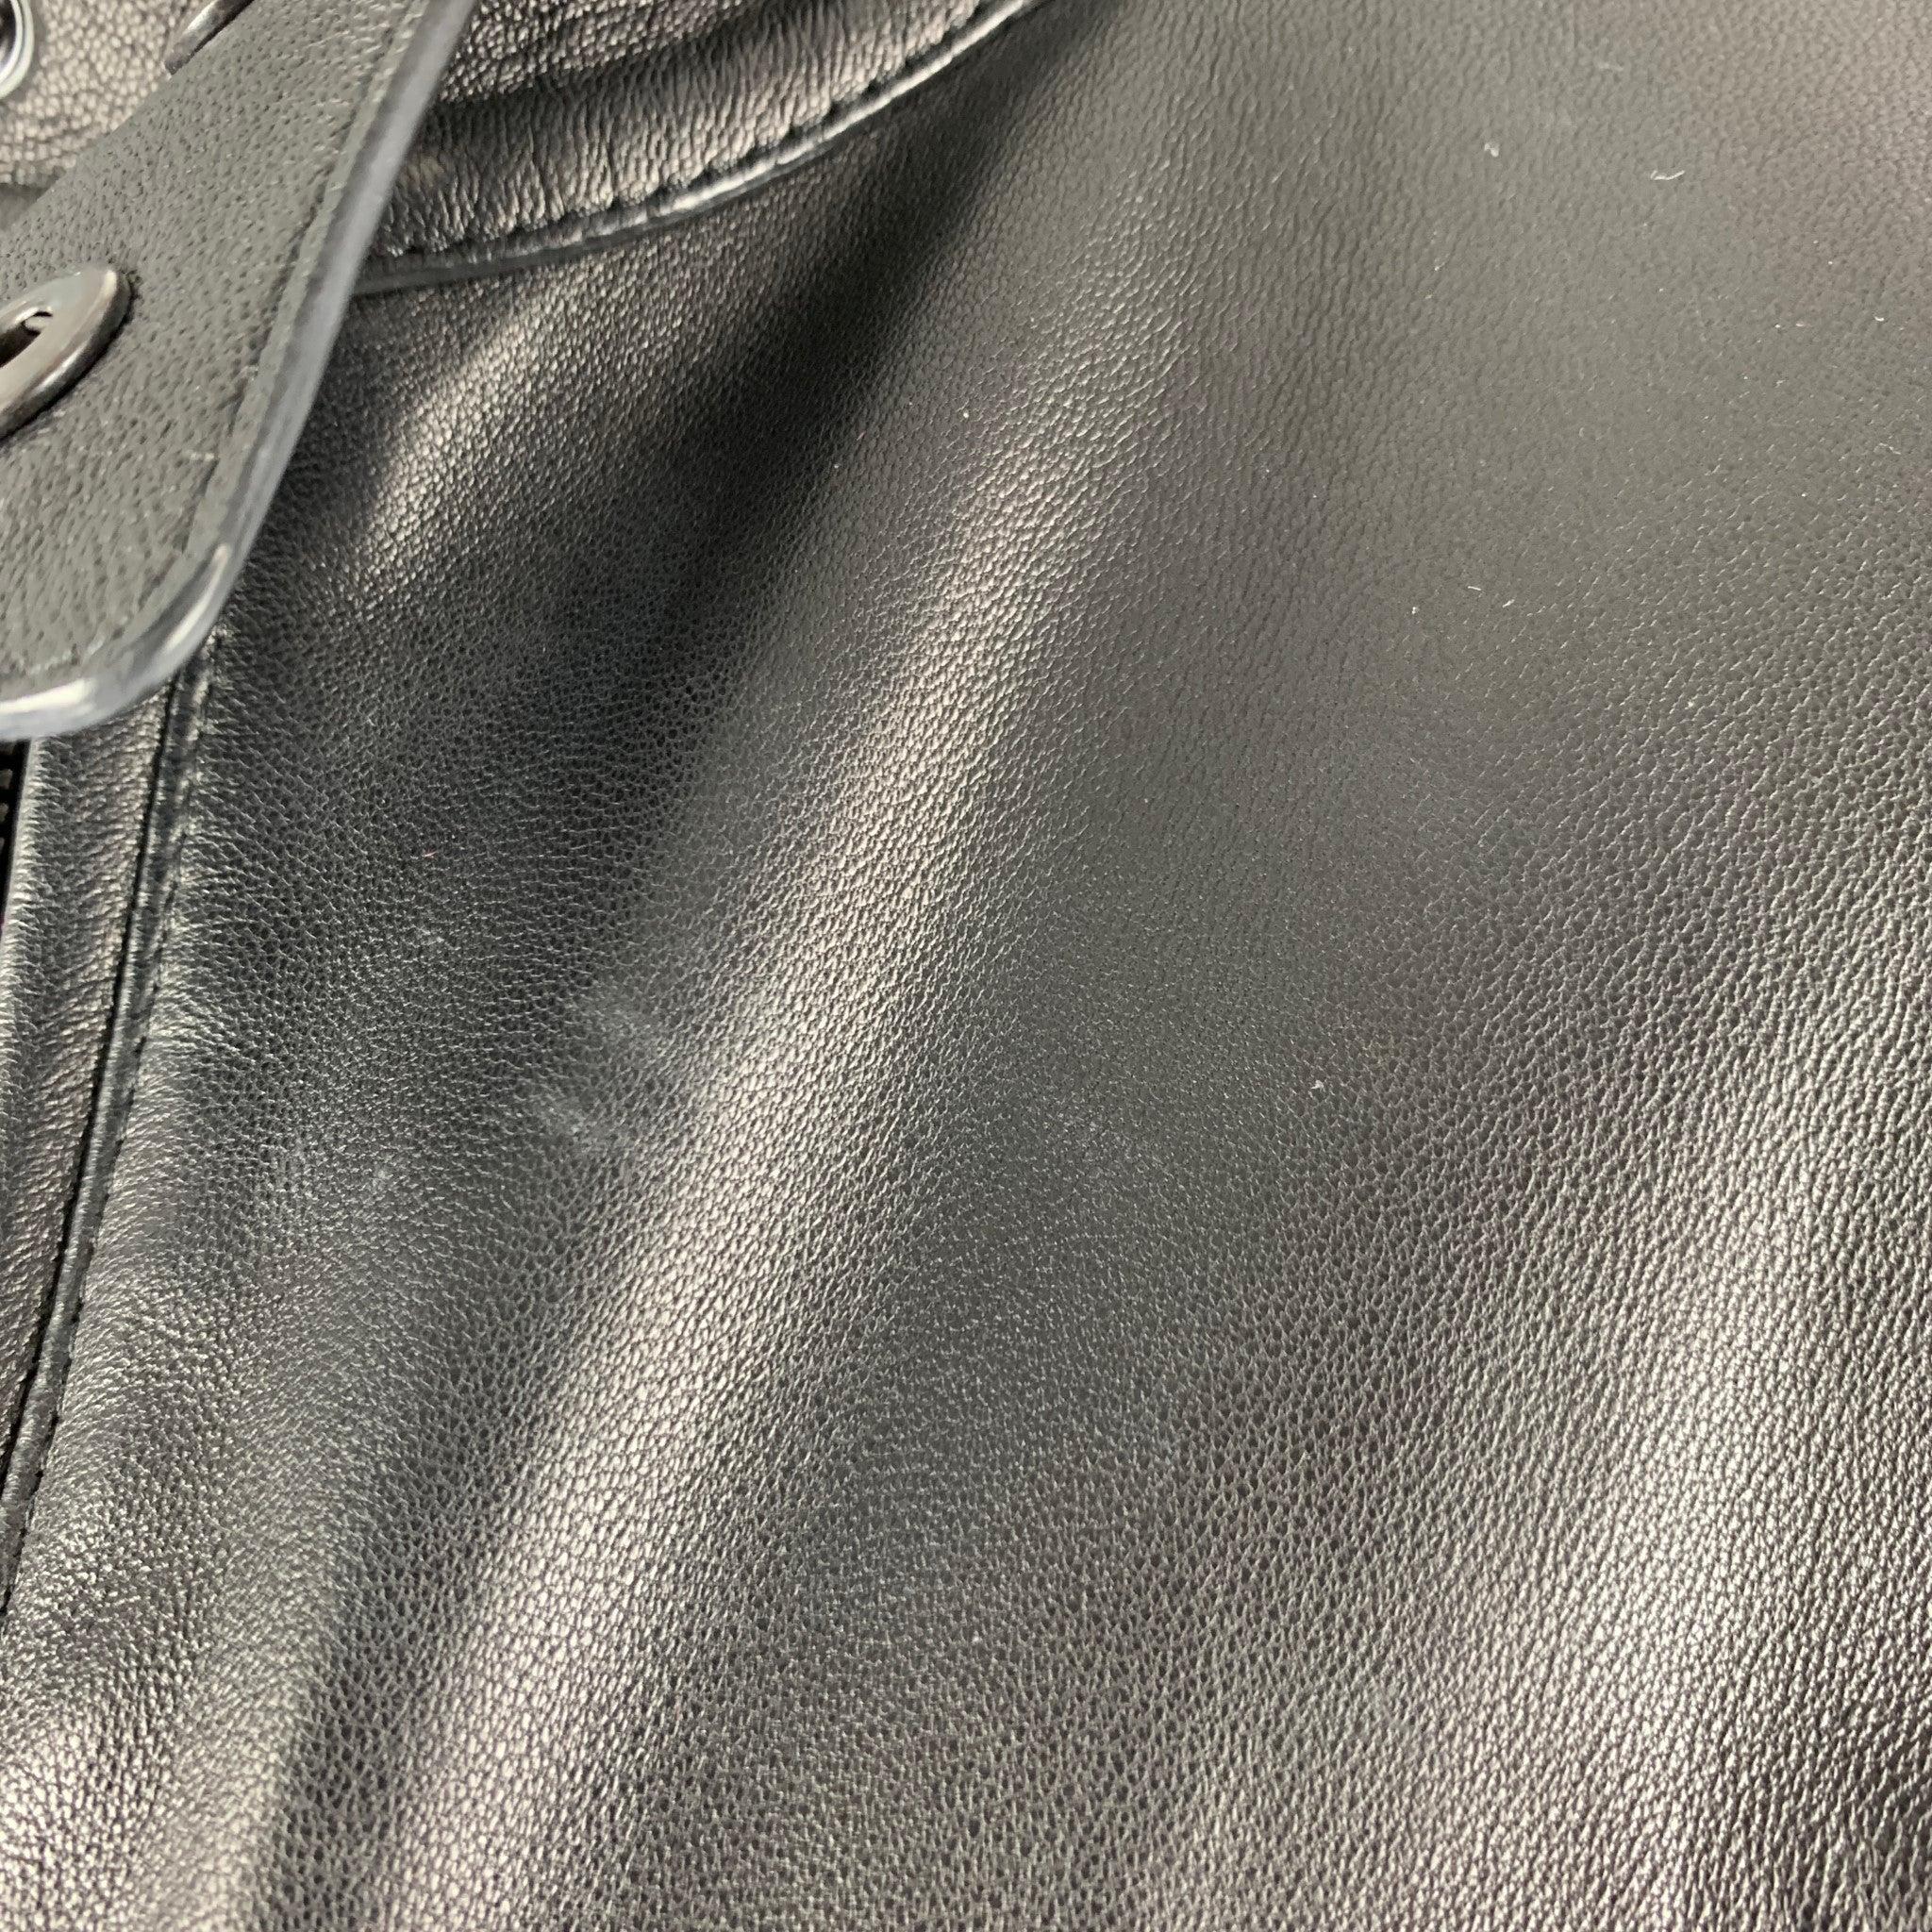 RALPH LAUREN Size 8 Black Studded Leather Zip Up Jacket For Sale 3